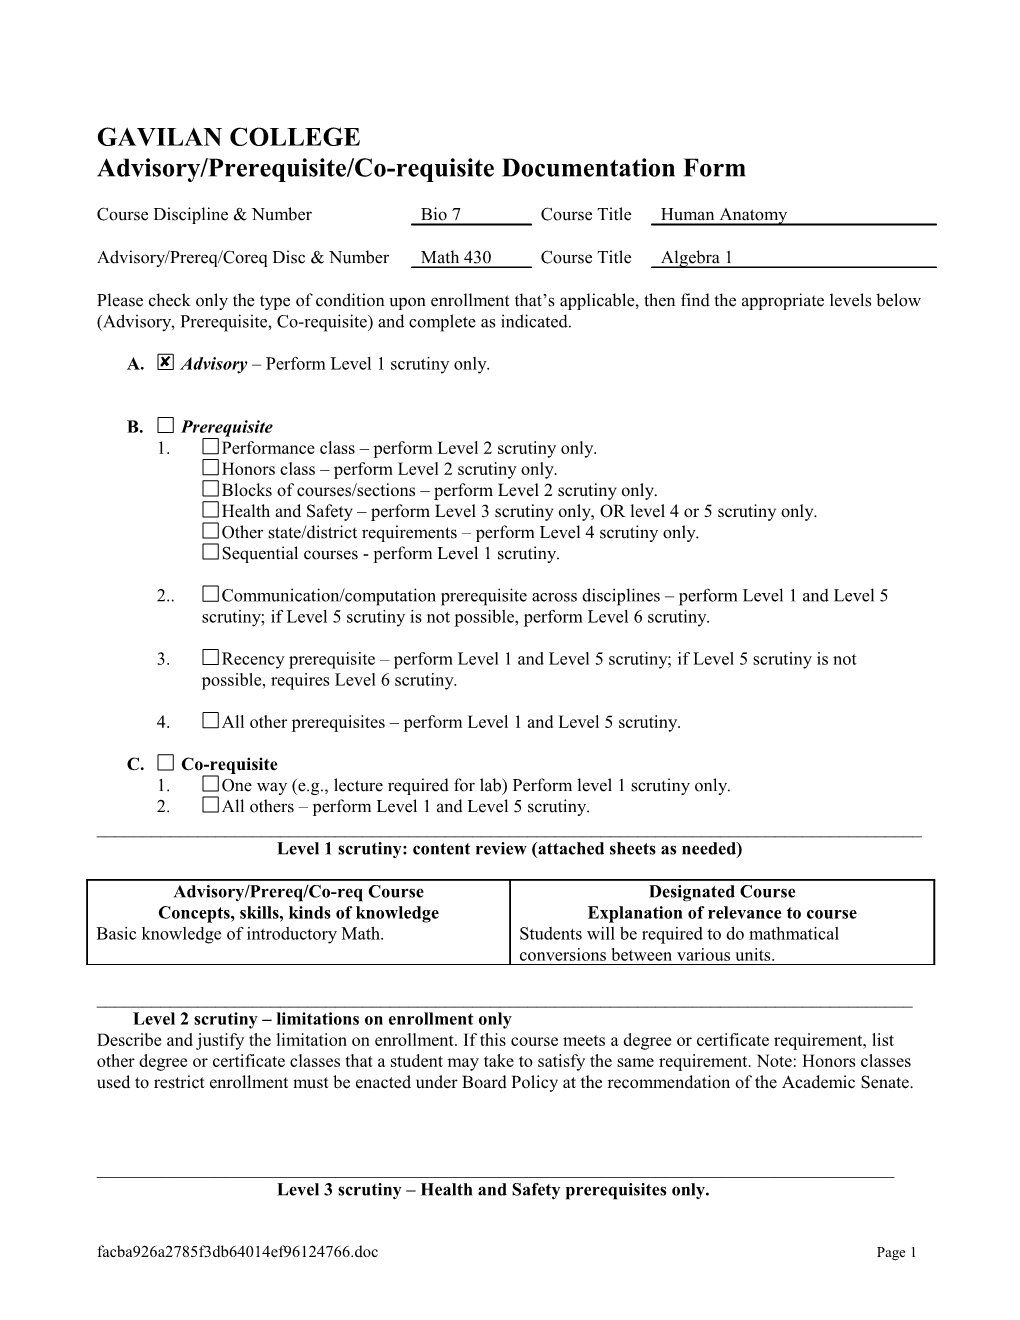 Advisory/Prerequisite/Co-Requisite Documentation Form s1